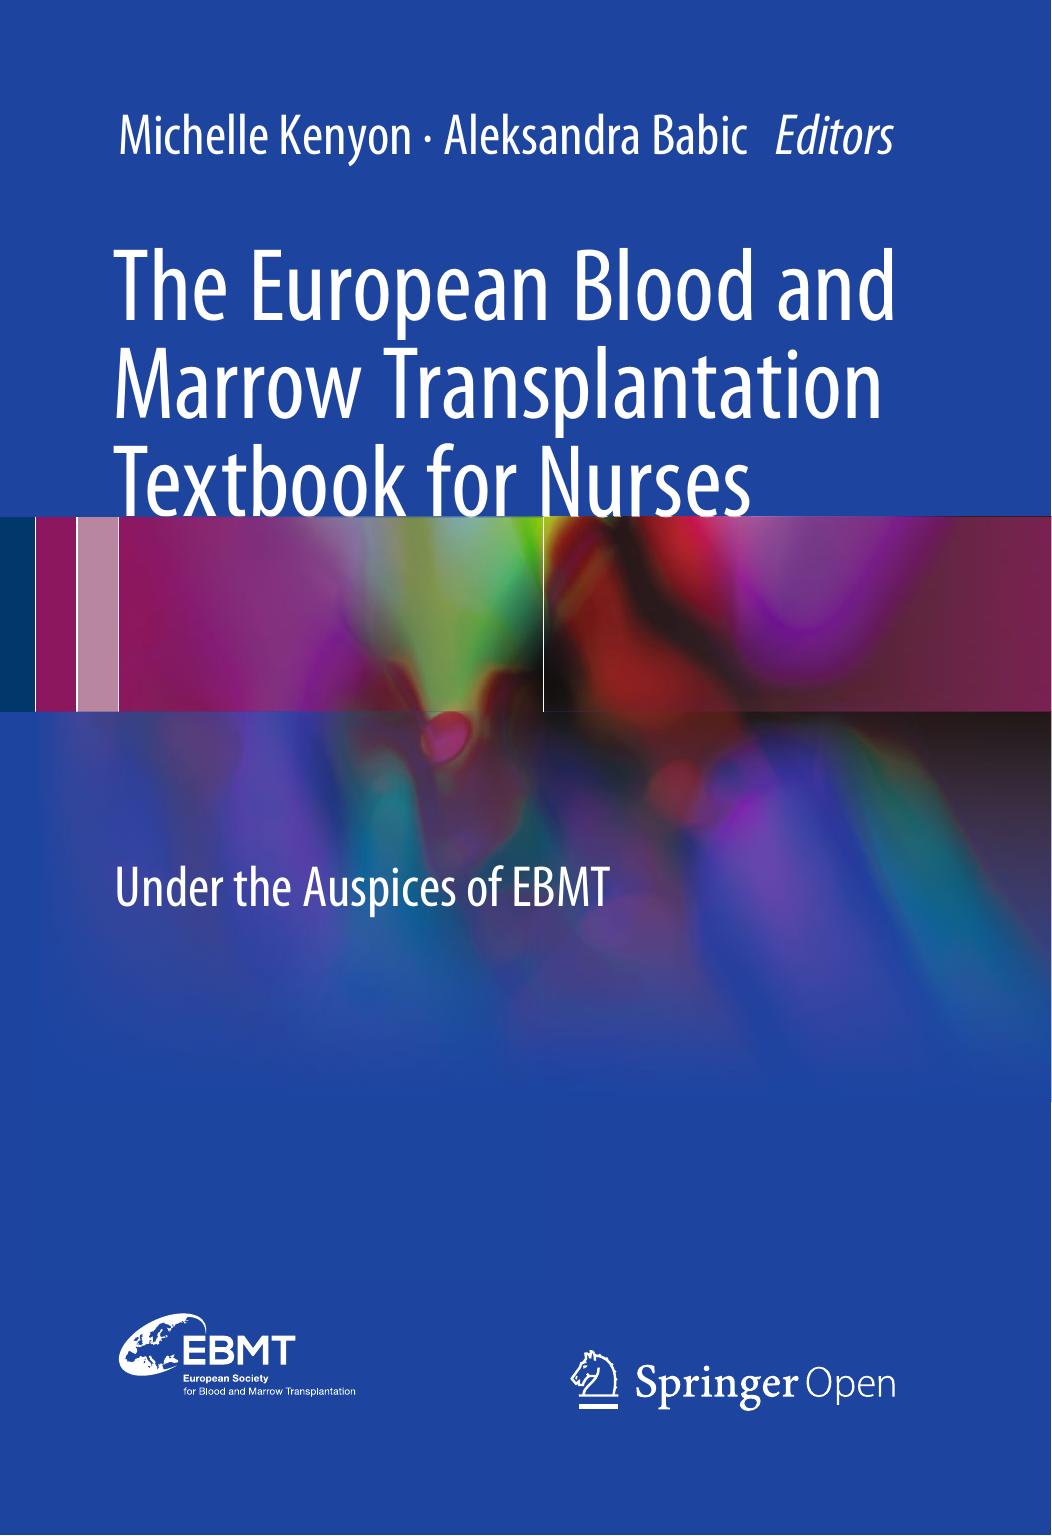 The European Blood and Marrow Transplantation Textbook for Nurses by Michelle Kenyon & Aleksandra Babic